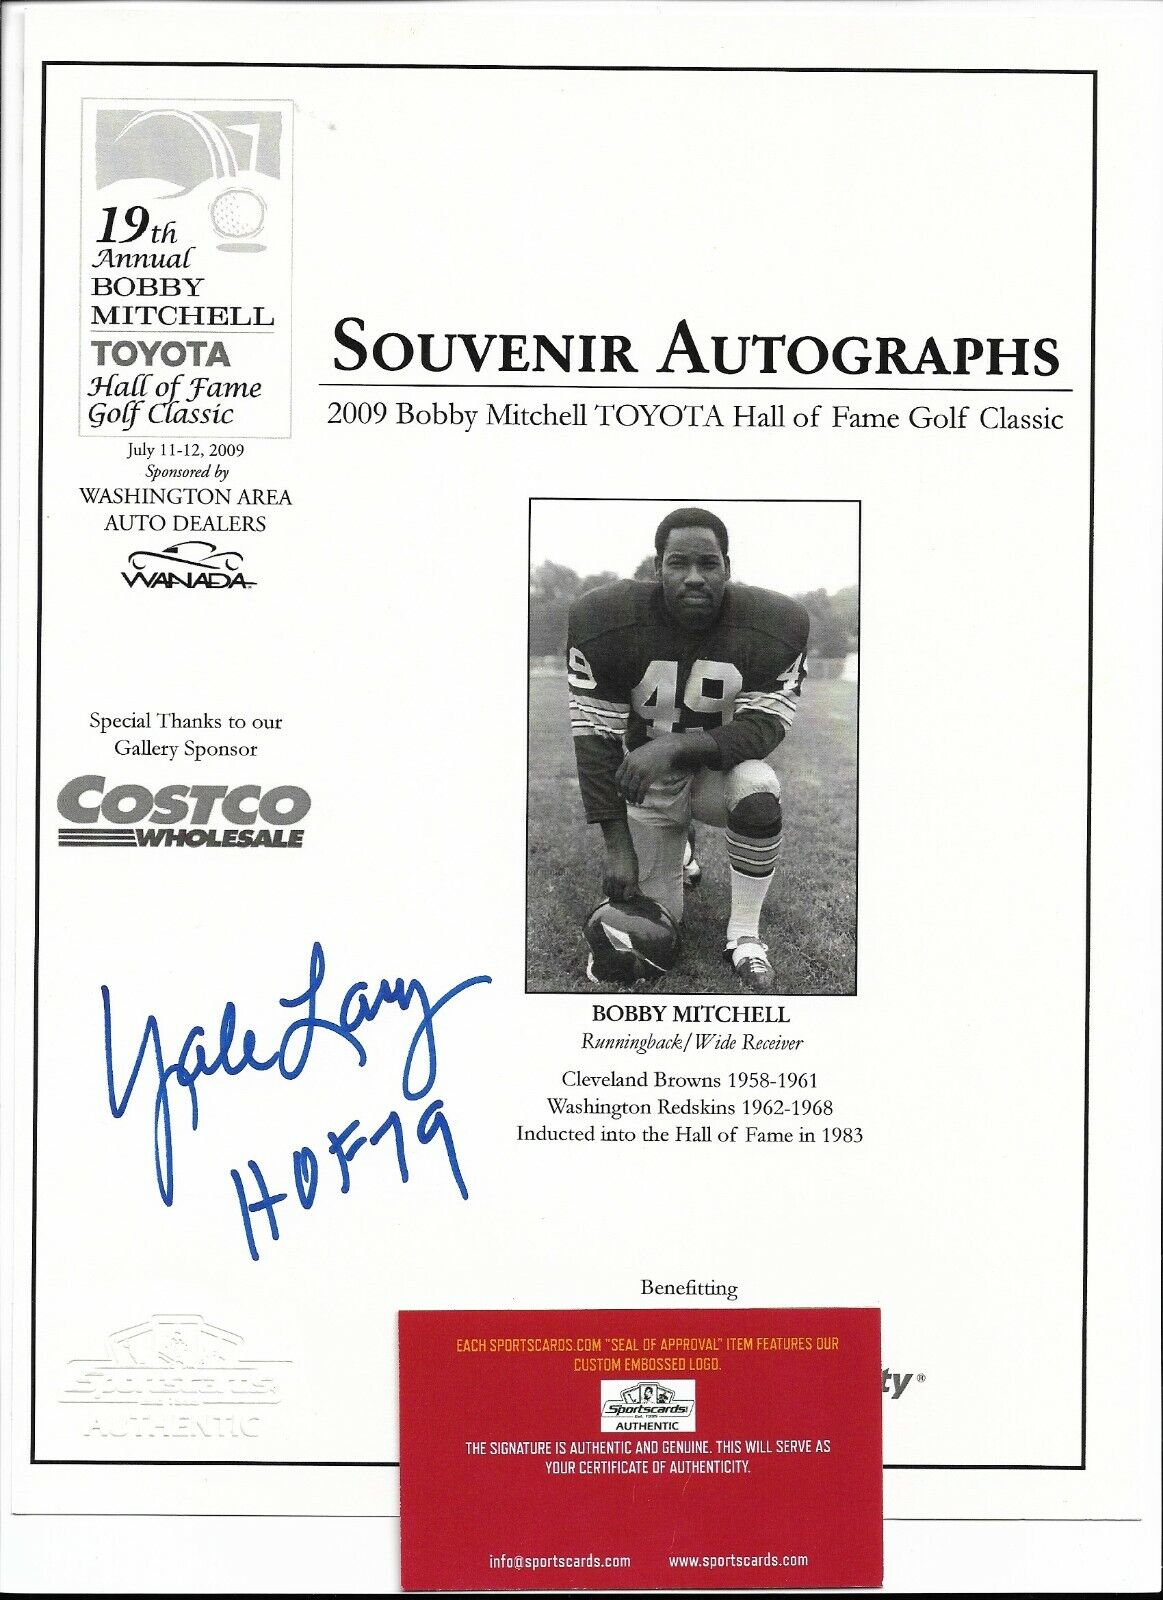 Detroit Lions Football ~Robert Yale Lary D.17~ Signed 8x10 Autograph Photo Poster painting SCSOA